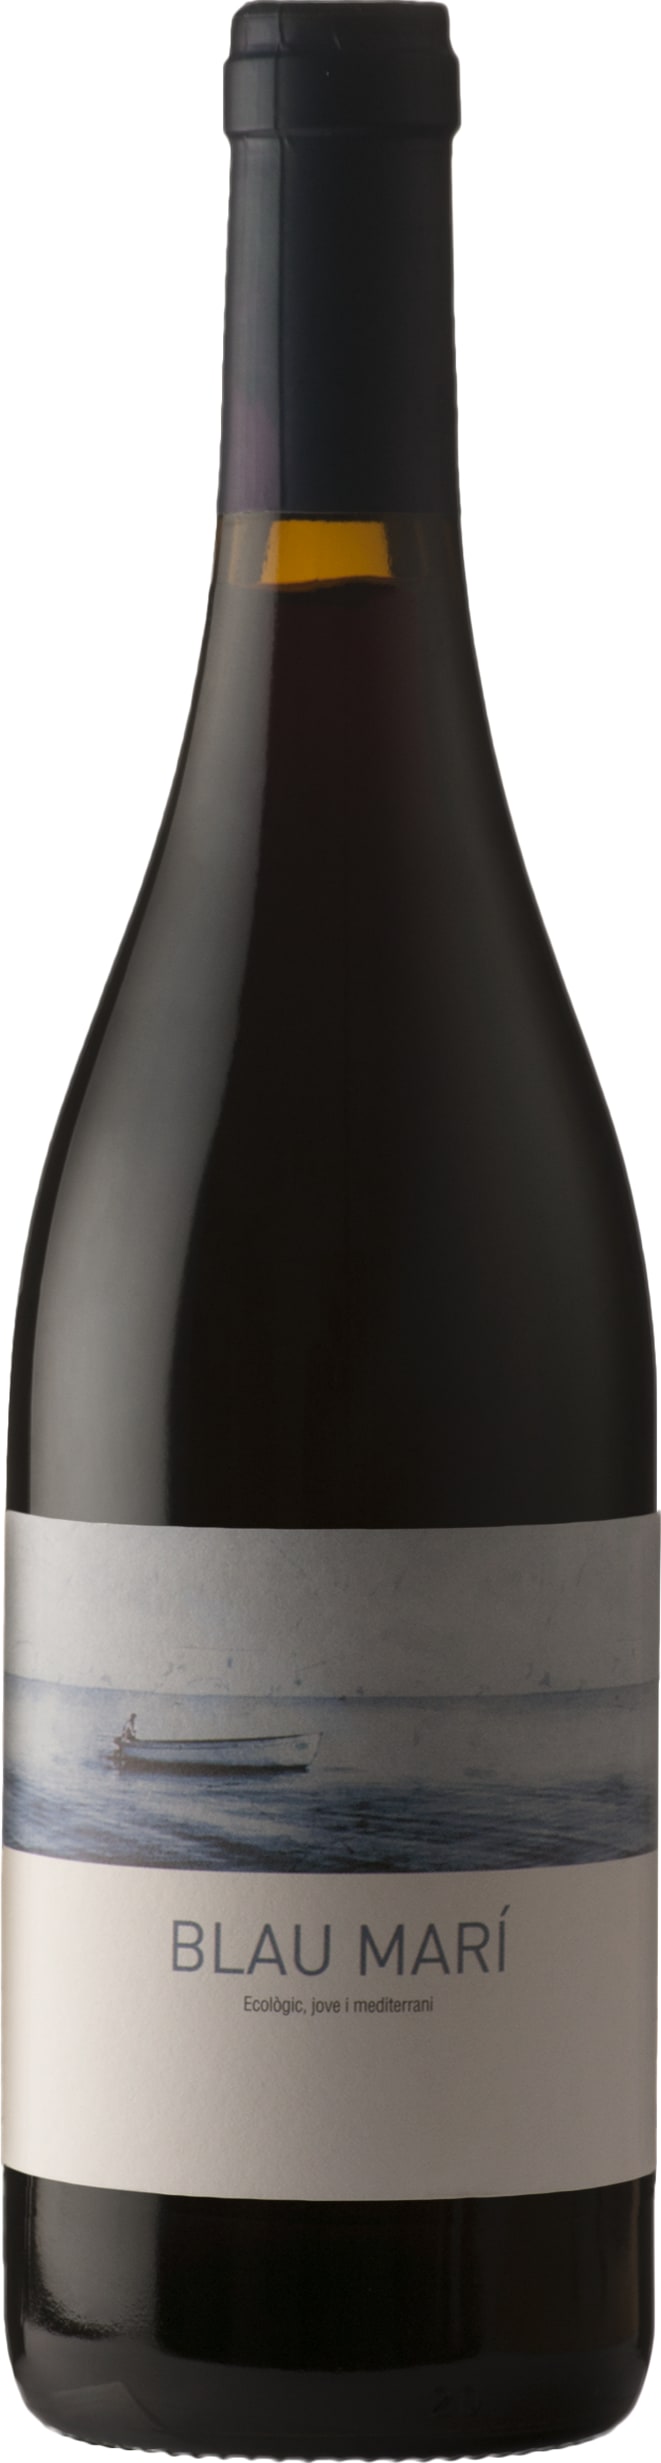 Celler 9+ Blau Mari Negre Organic 2021 75cl - Buy Celler 9+ Wines from GREAT WINES DIRECT wine shop